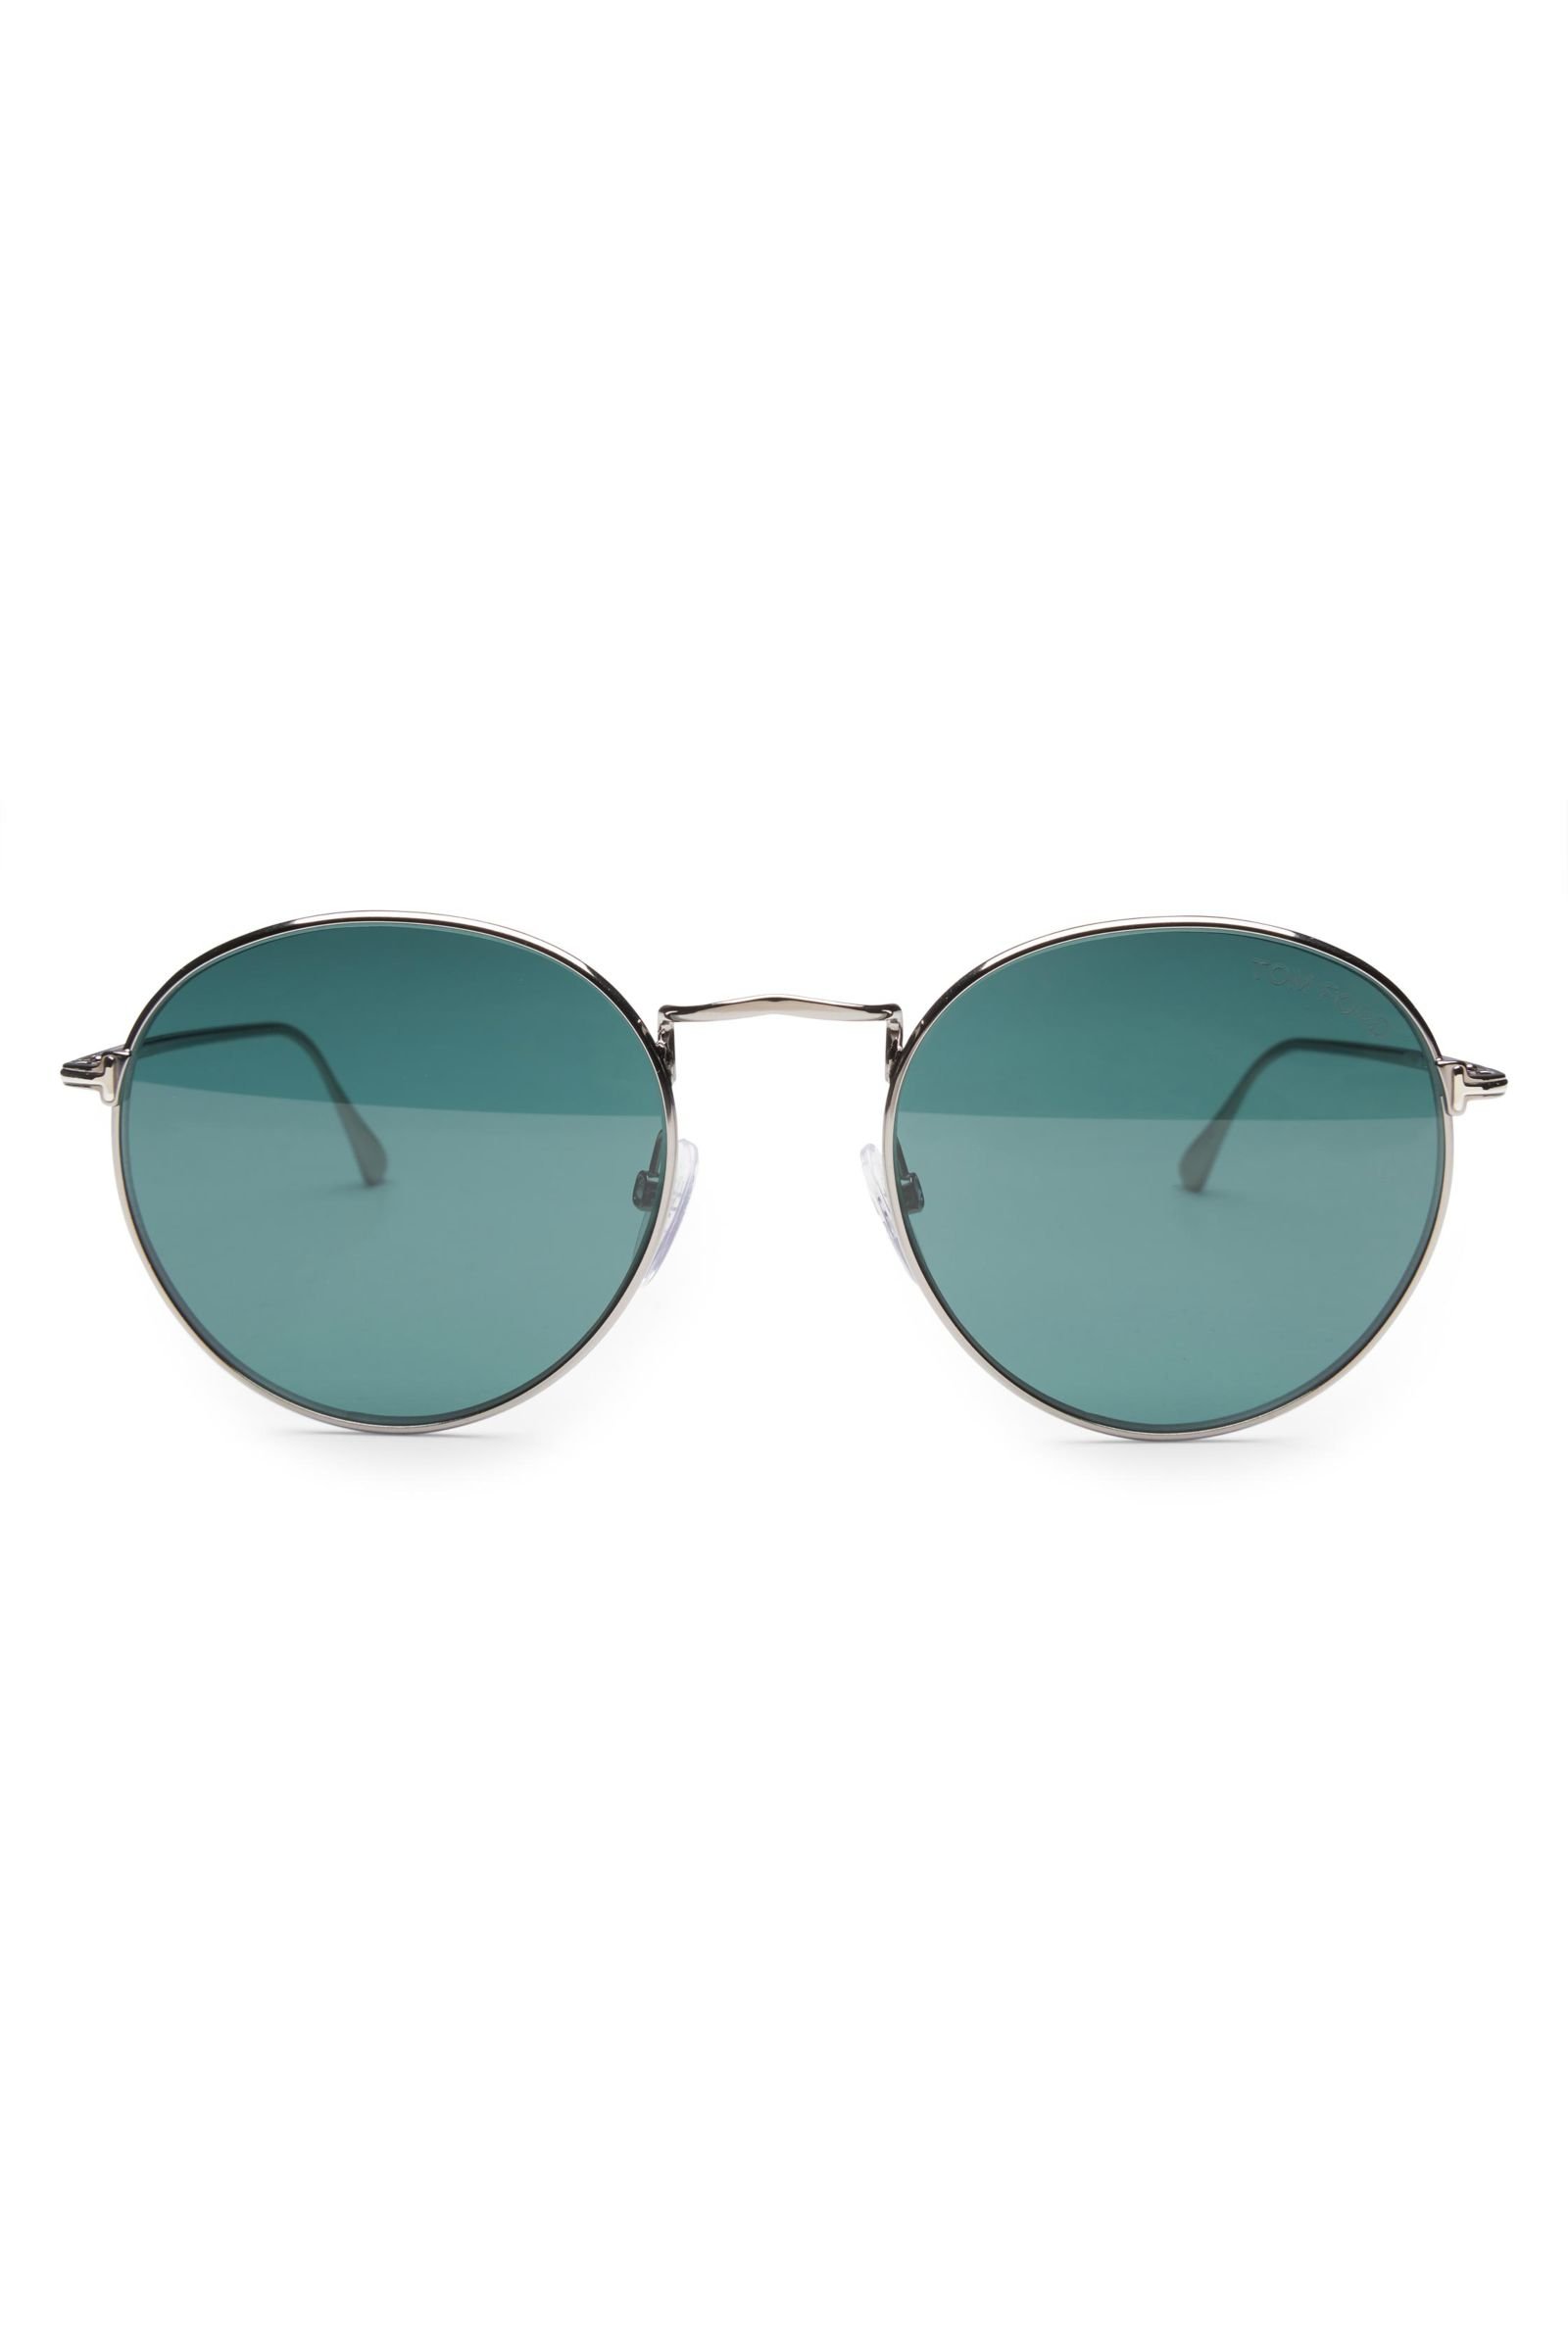 Sunglasses 'Ryan' silver/green